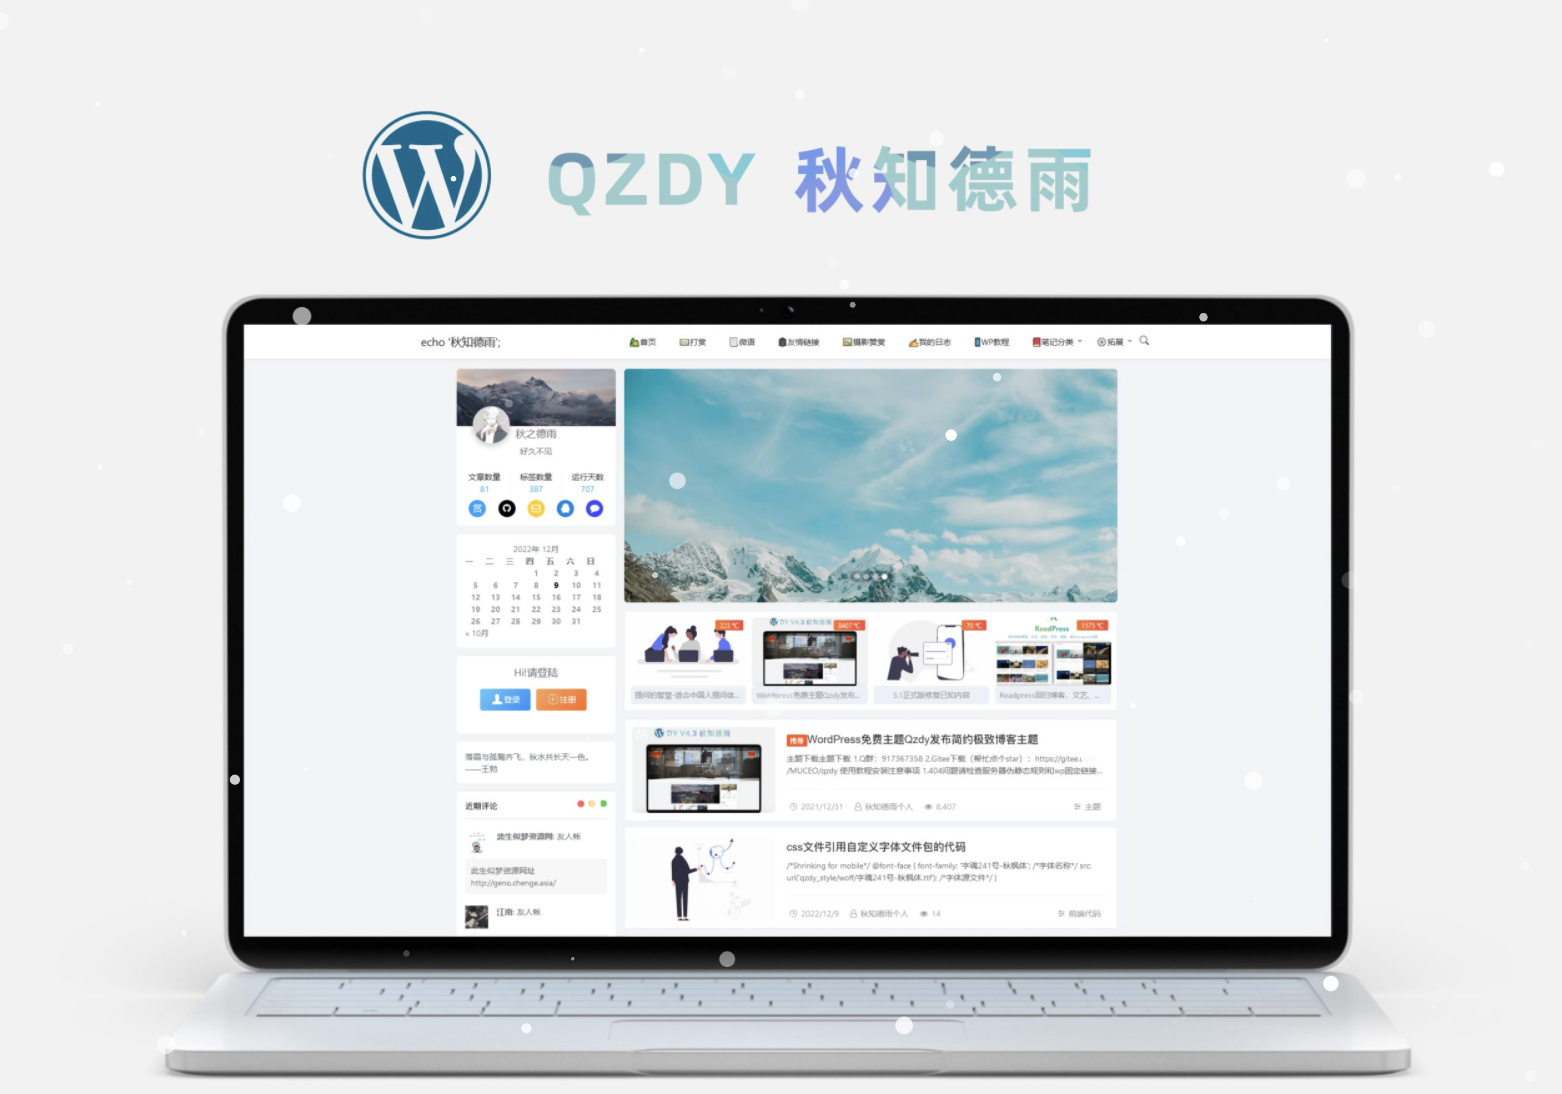 WordPress免费主题Qzdy简约极致博客主题 - 鹿泽笔记